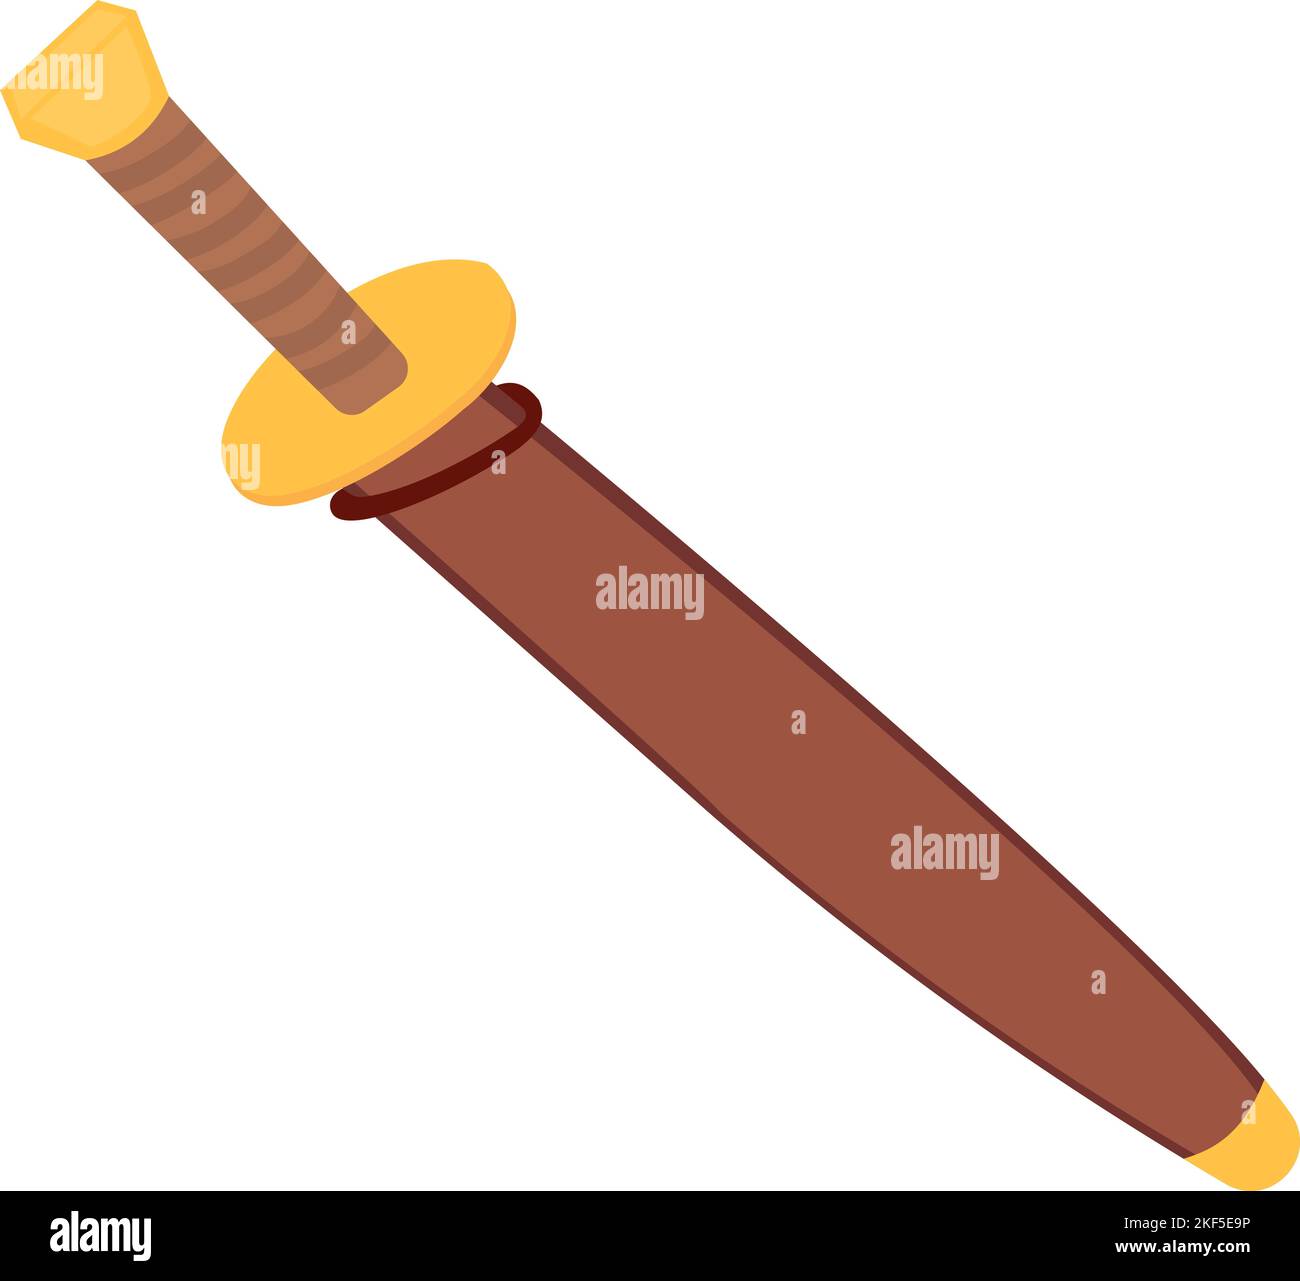 Sword in scabbard color icon. Dagger in leather sheath Stock Vector